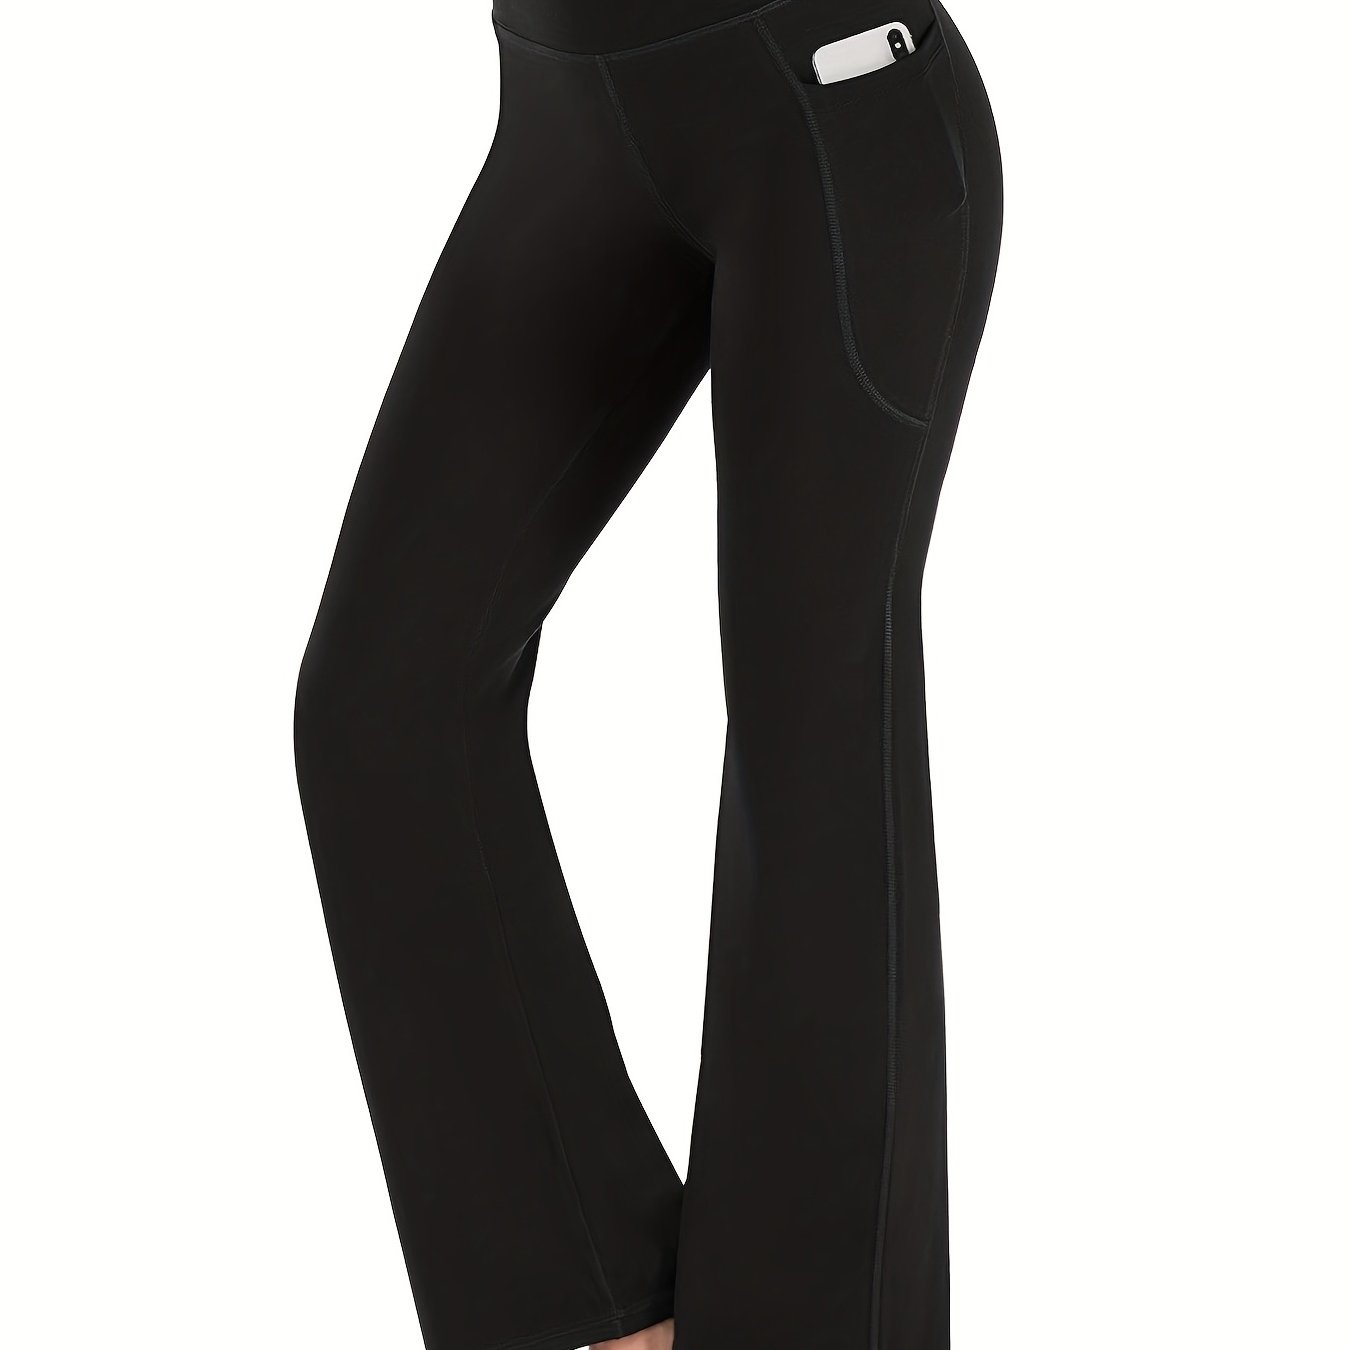 IUGA Bootcut Yoga Pants with Pockets for Women Wide Leg Pants High